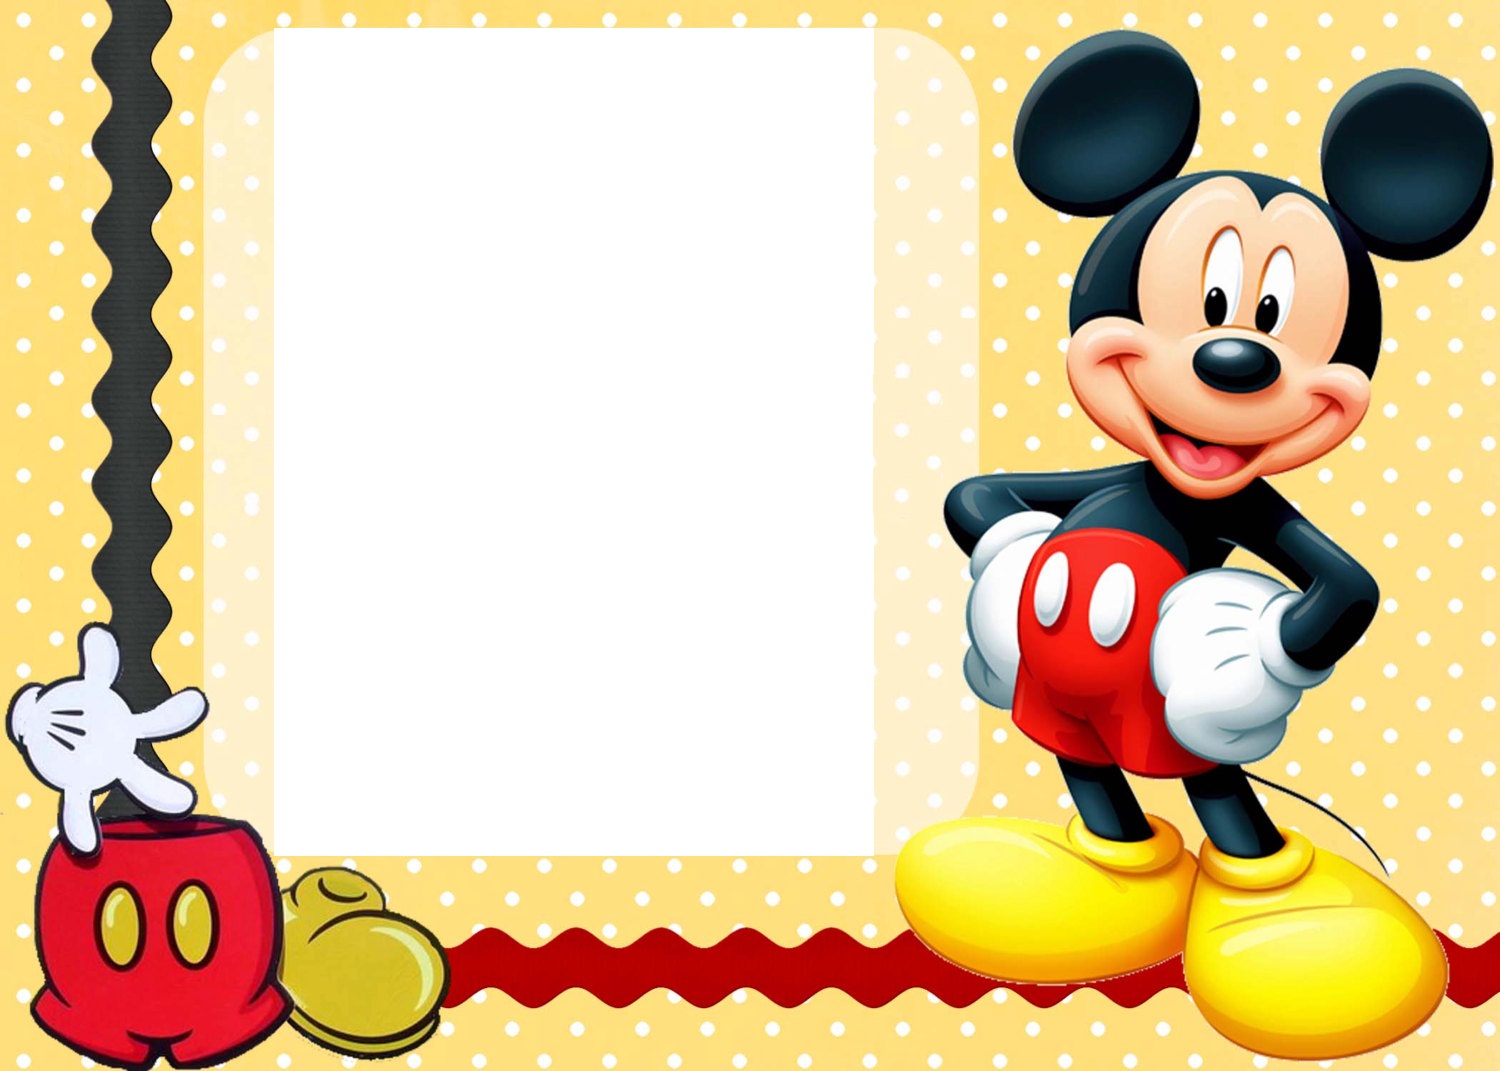 Free Printable Mickey Mouse Birthday Cards   Luxury Lifestyle Design